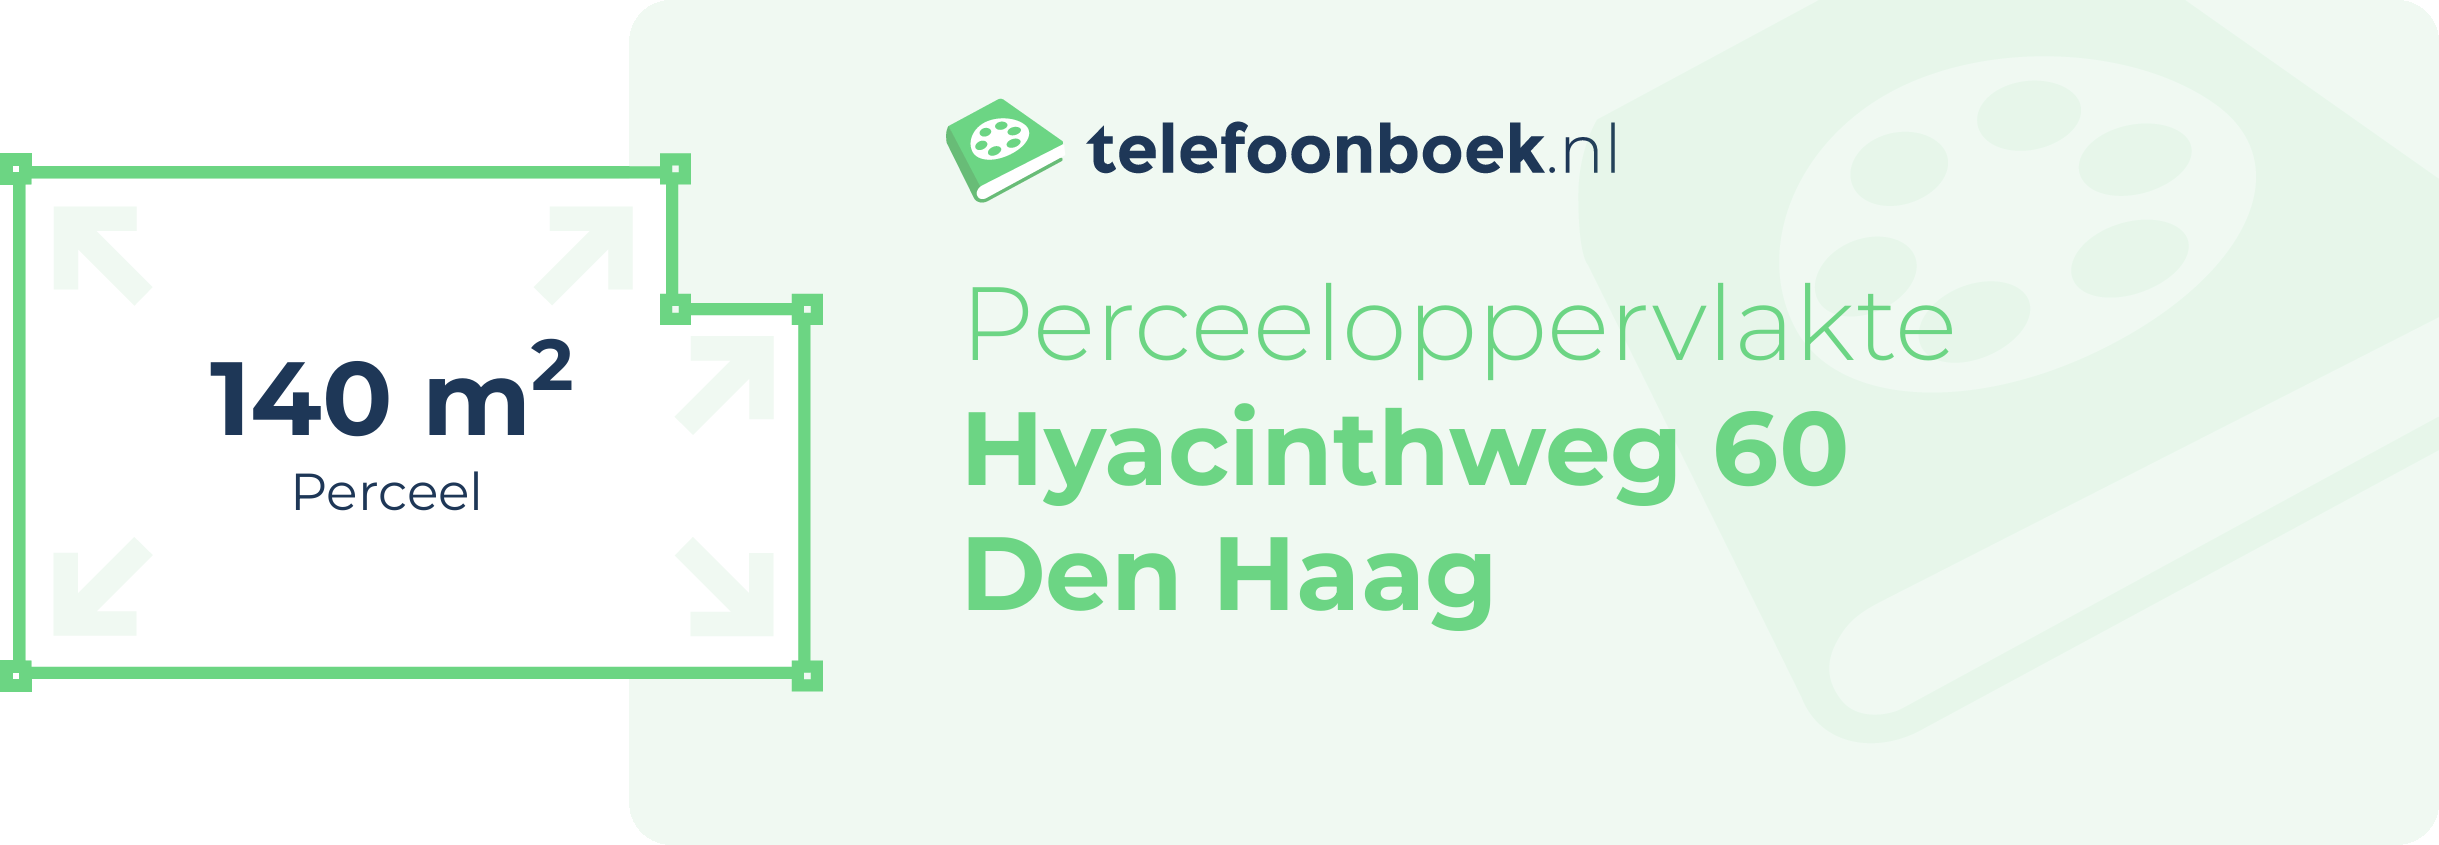 Perceeloppervlakte Hyacinthweg 60 Den Haag